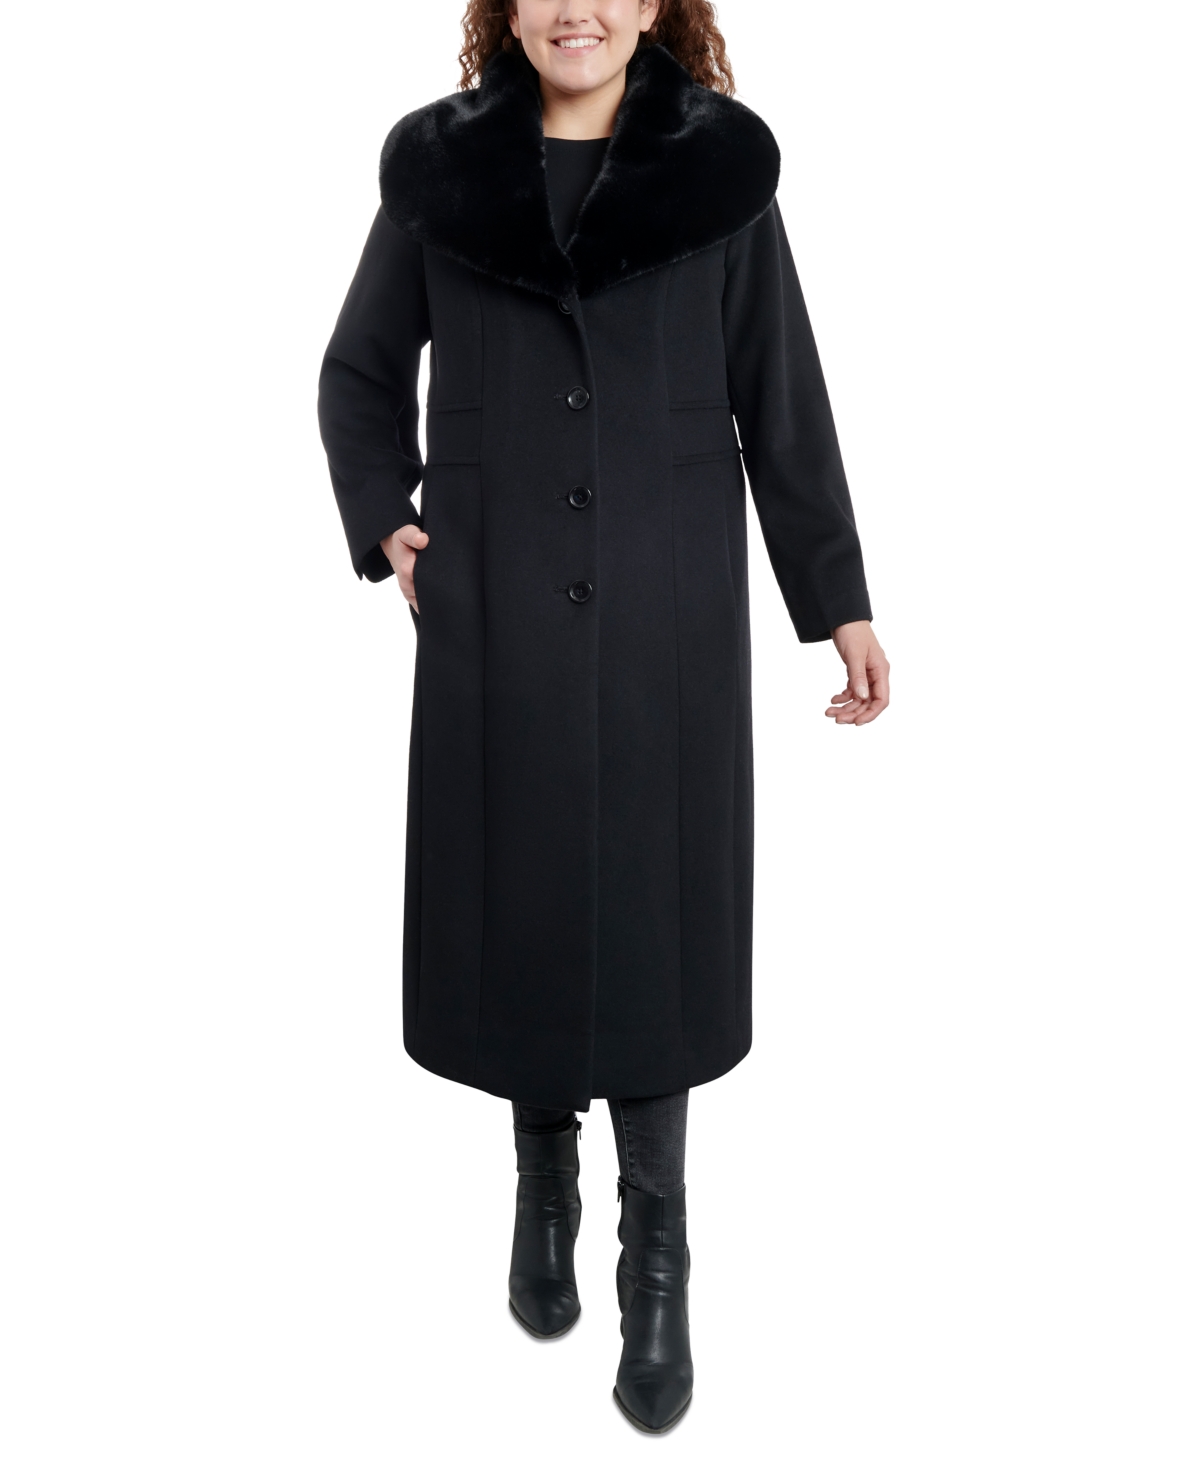 ANNE KLEIN WOMEN'S PLUS SIZE FAUX-FUR-COLLAR MAXI COAT, CREATED FOR MACY'S